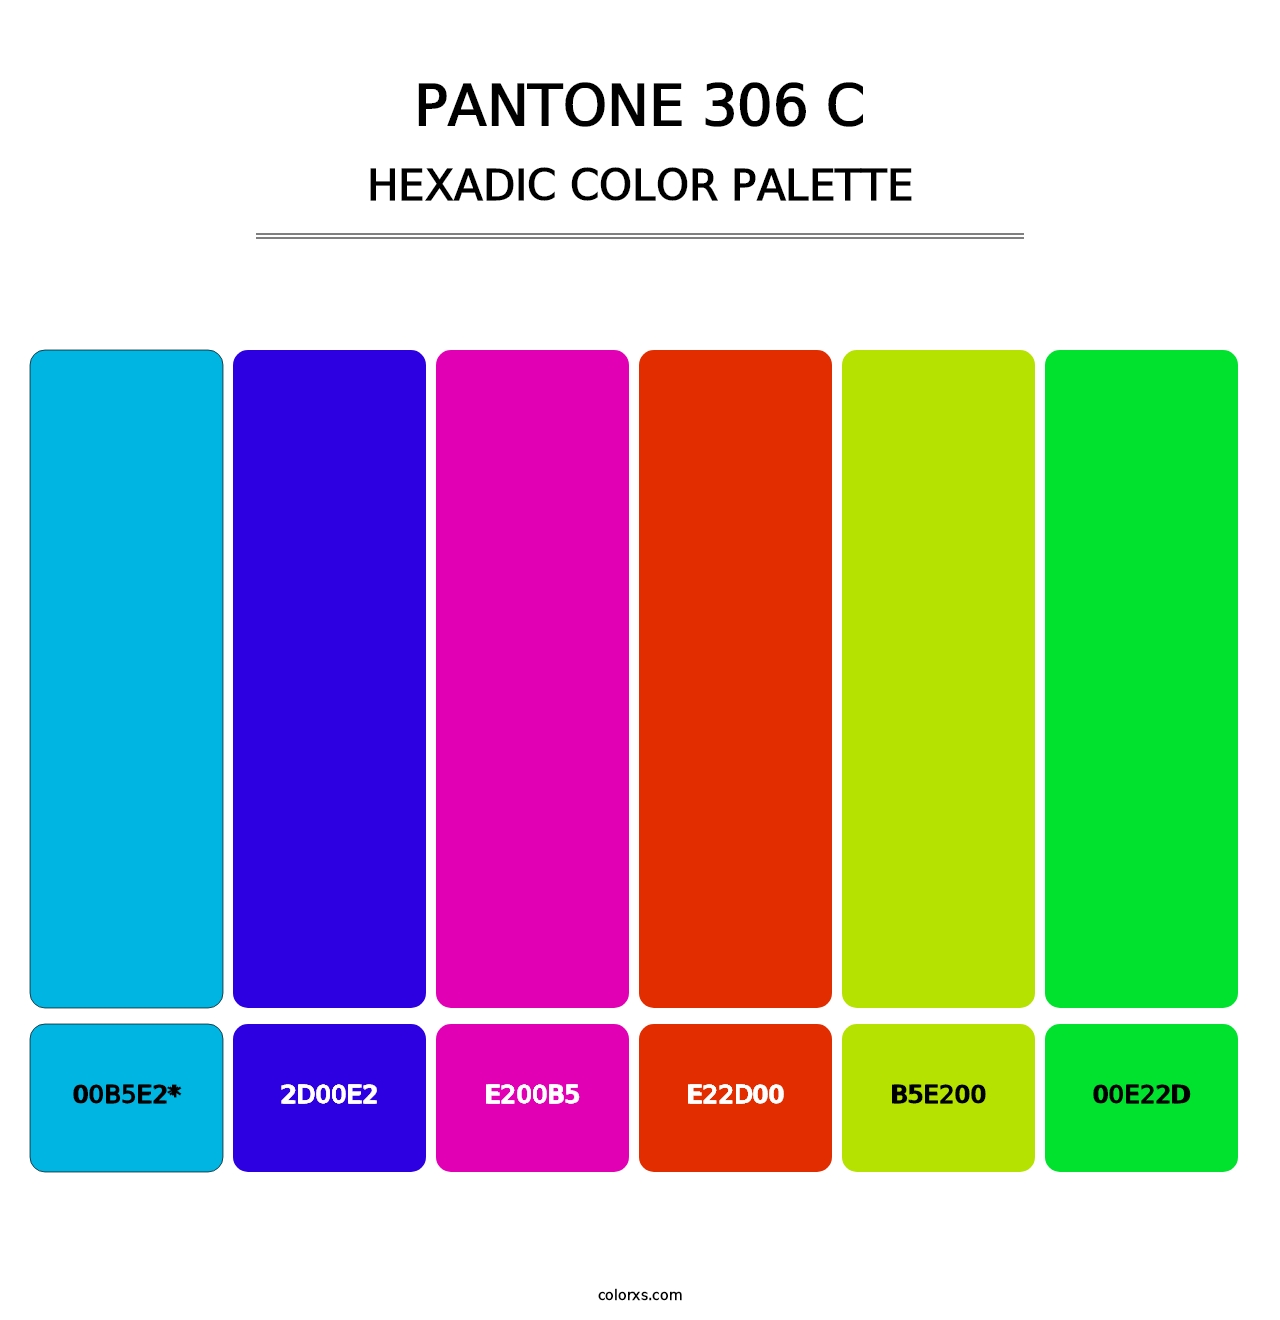 PANTONE 306 C - Hexadic Color Palette